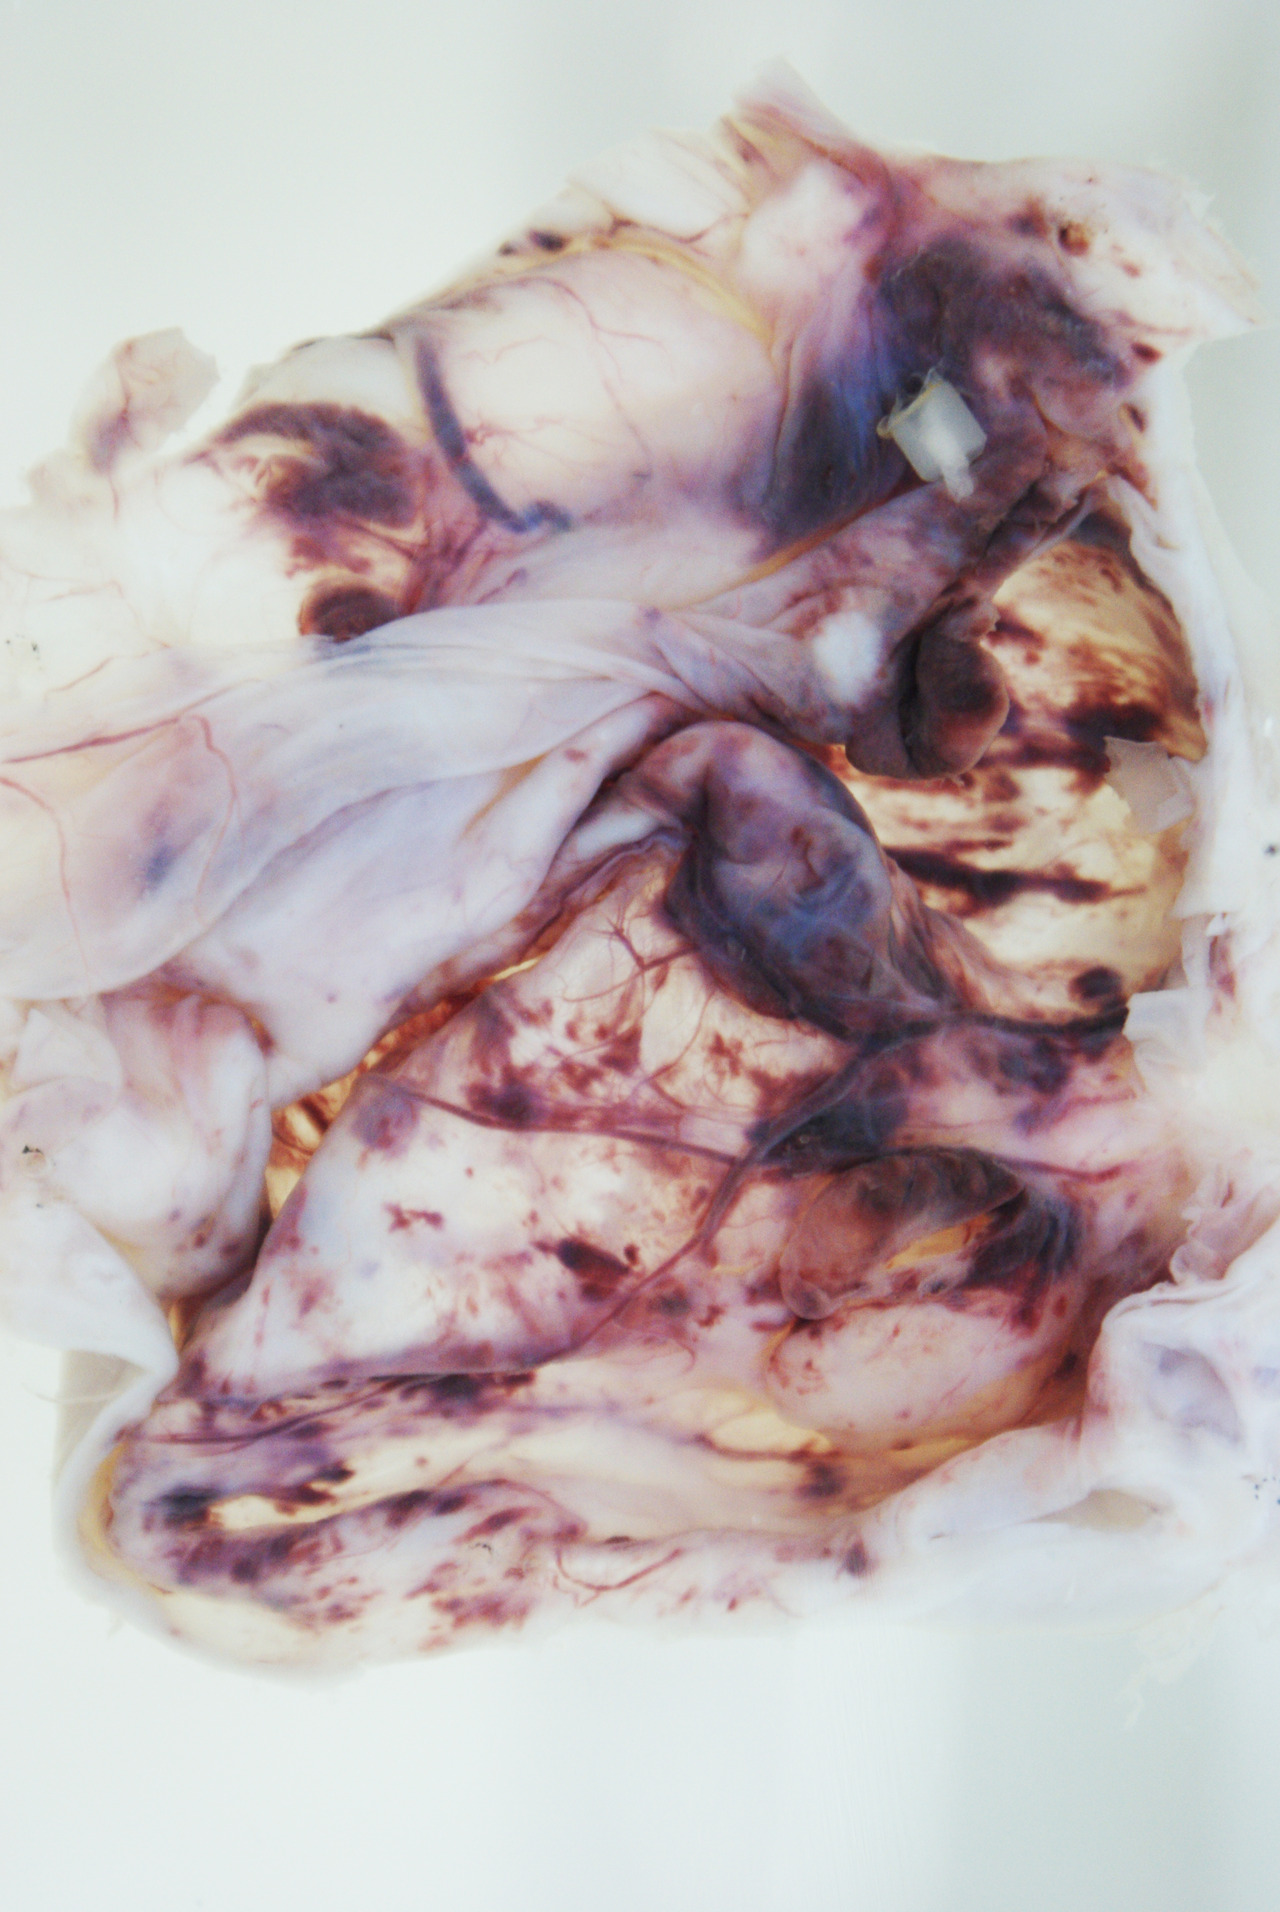 MIA-JANE HARRIS 'Beautiful Corpse' (2012-2013)